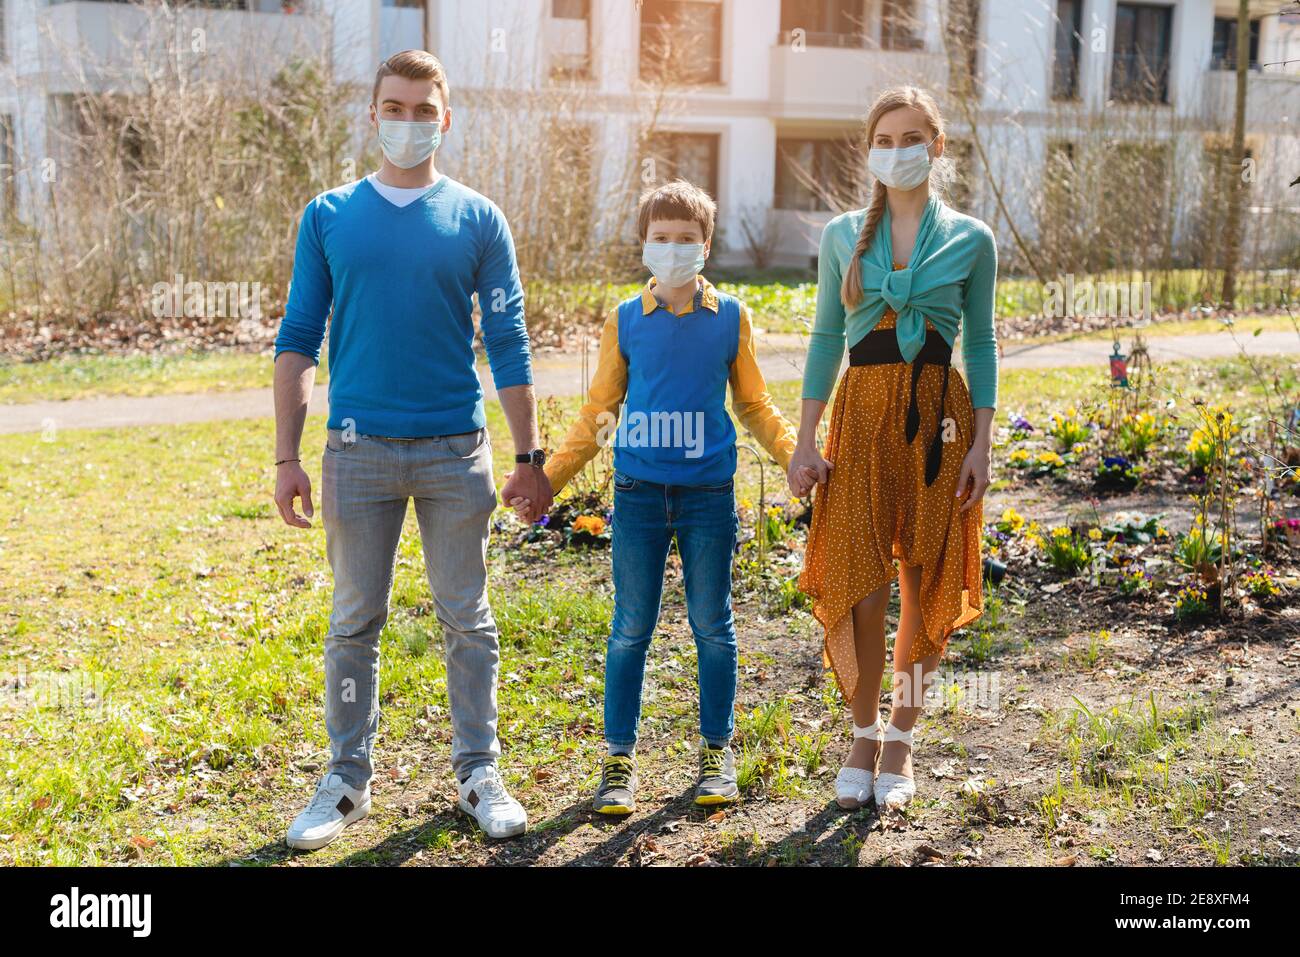 Family during coronavirus crises having a walk Stock Photo